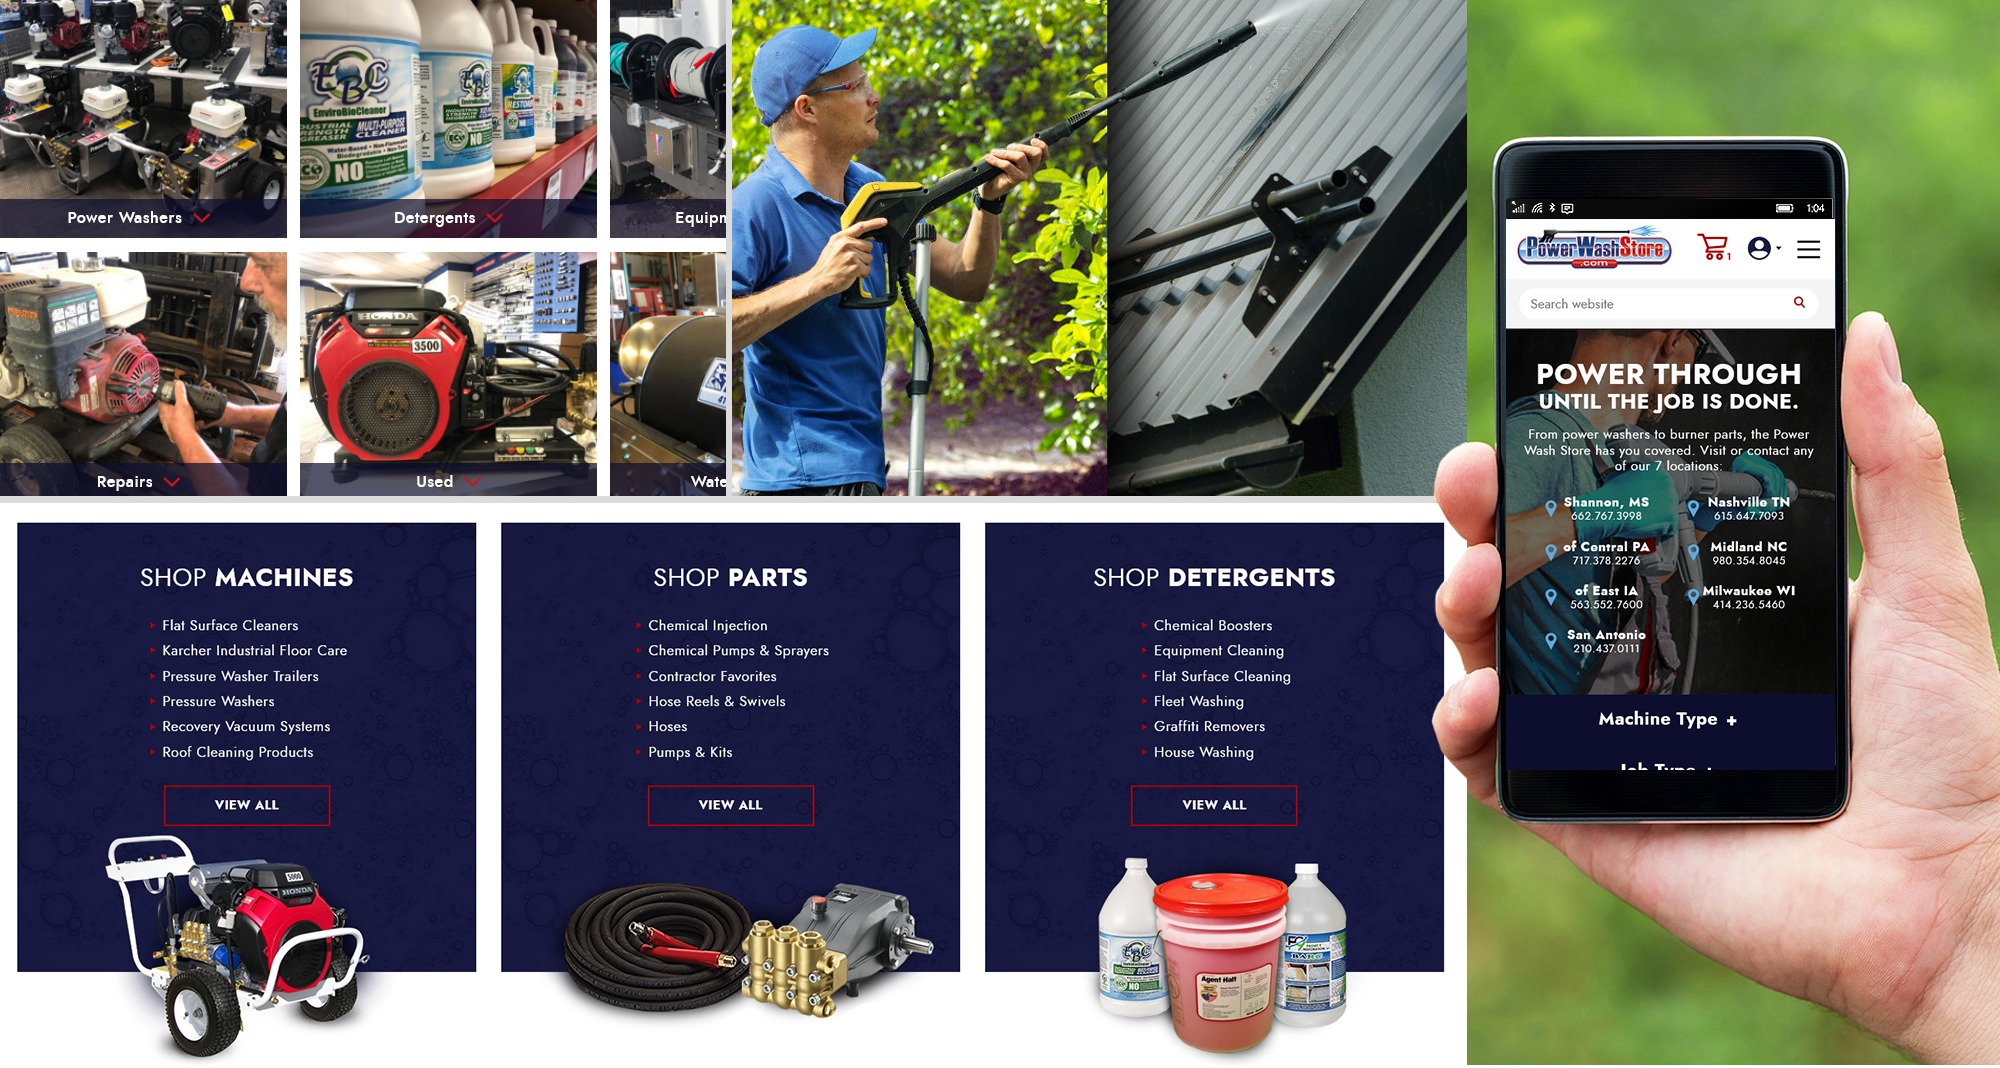 Milwaukee web marketing for Power Wash Store